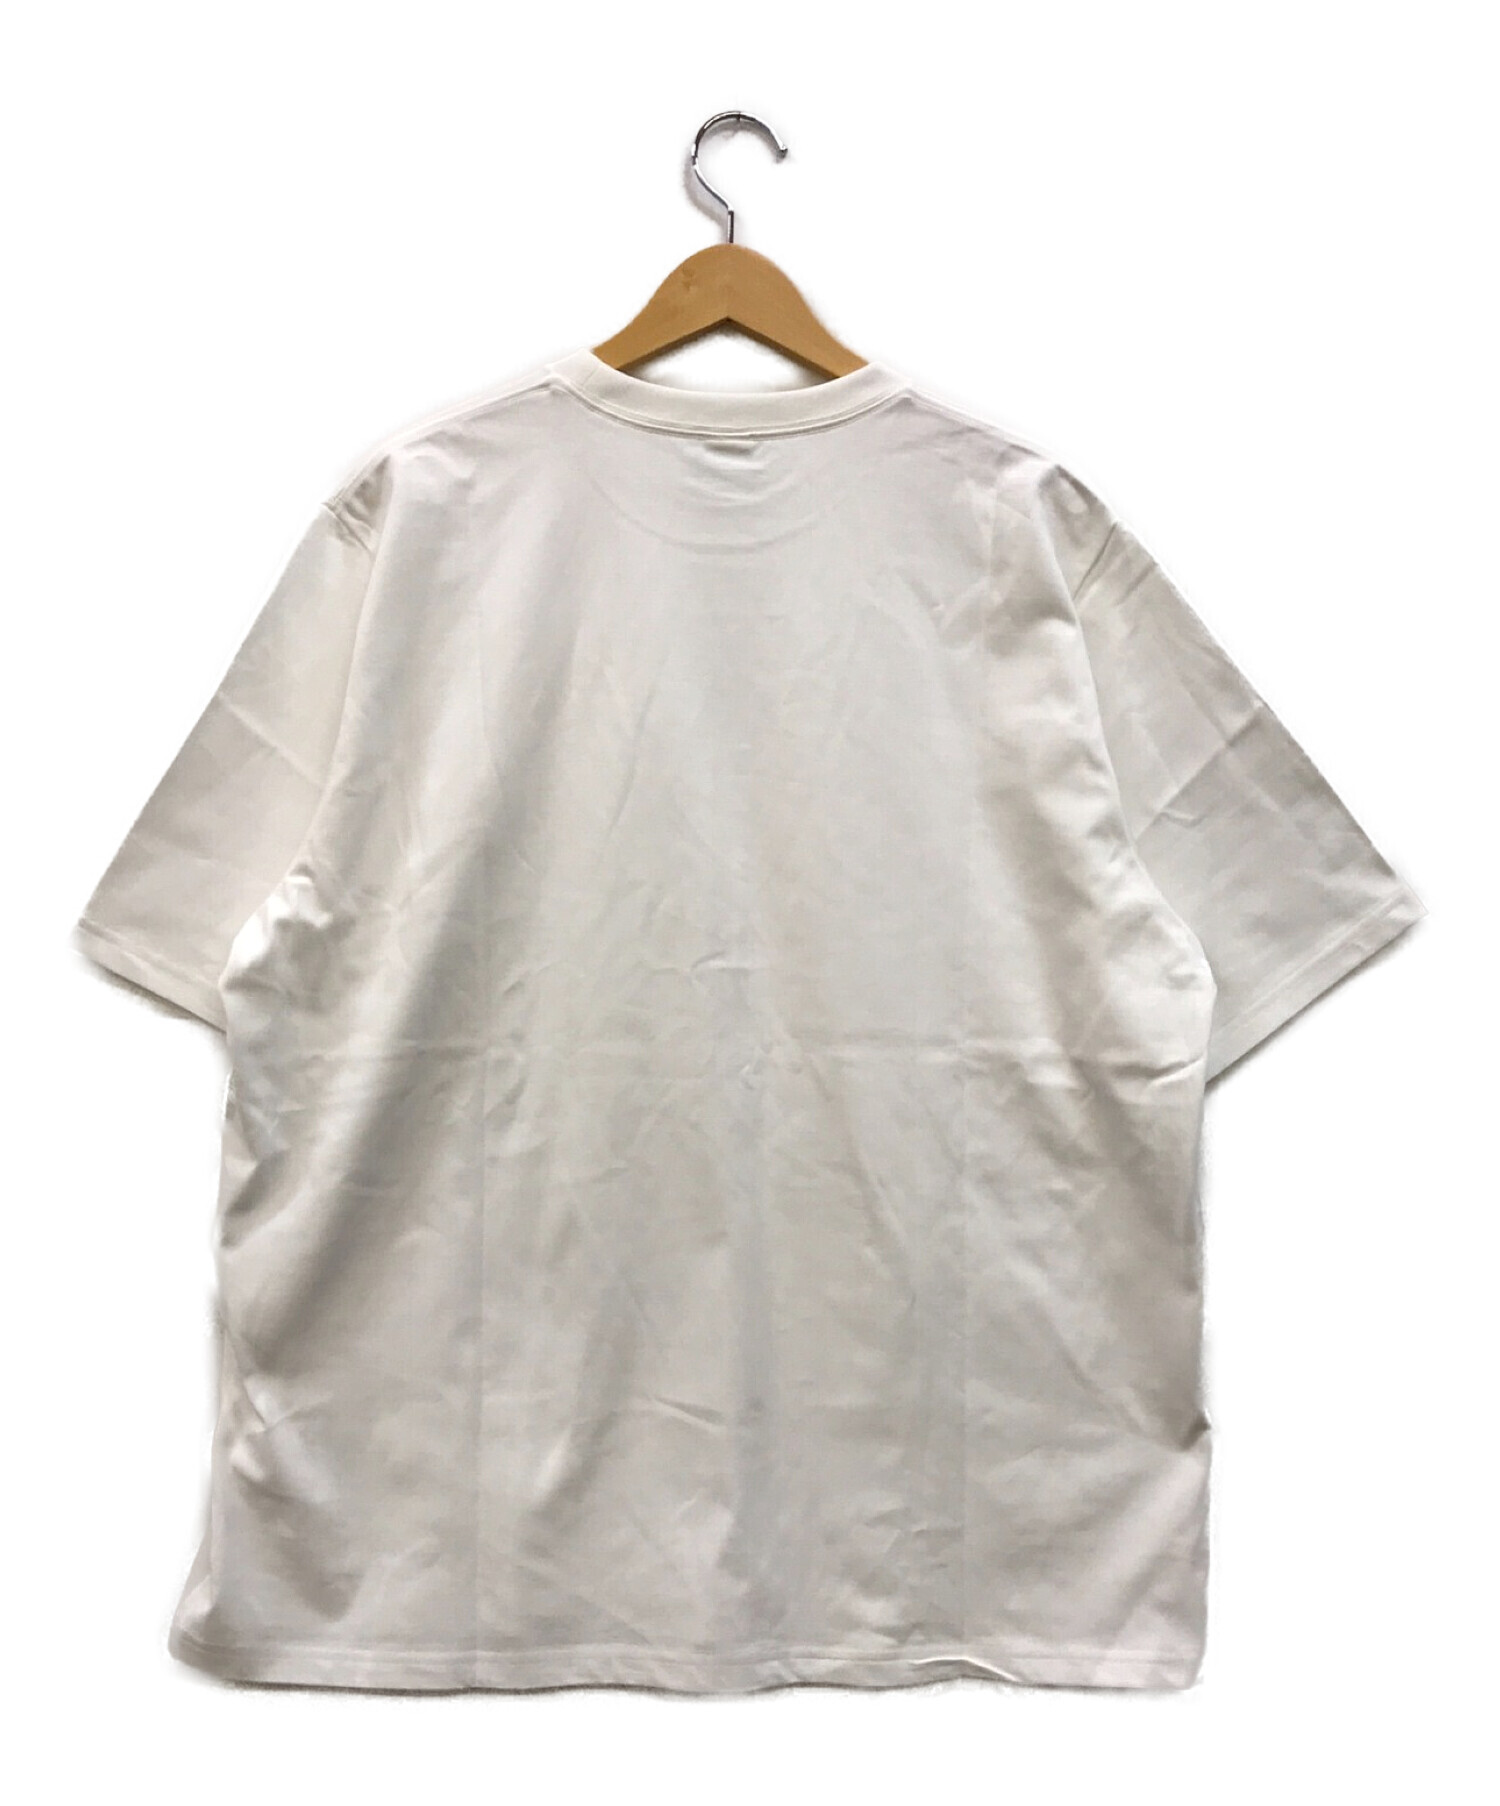 OVY Fine Cotton Basic Tshirts サイズXL - その他